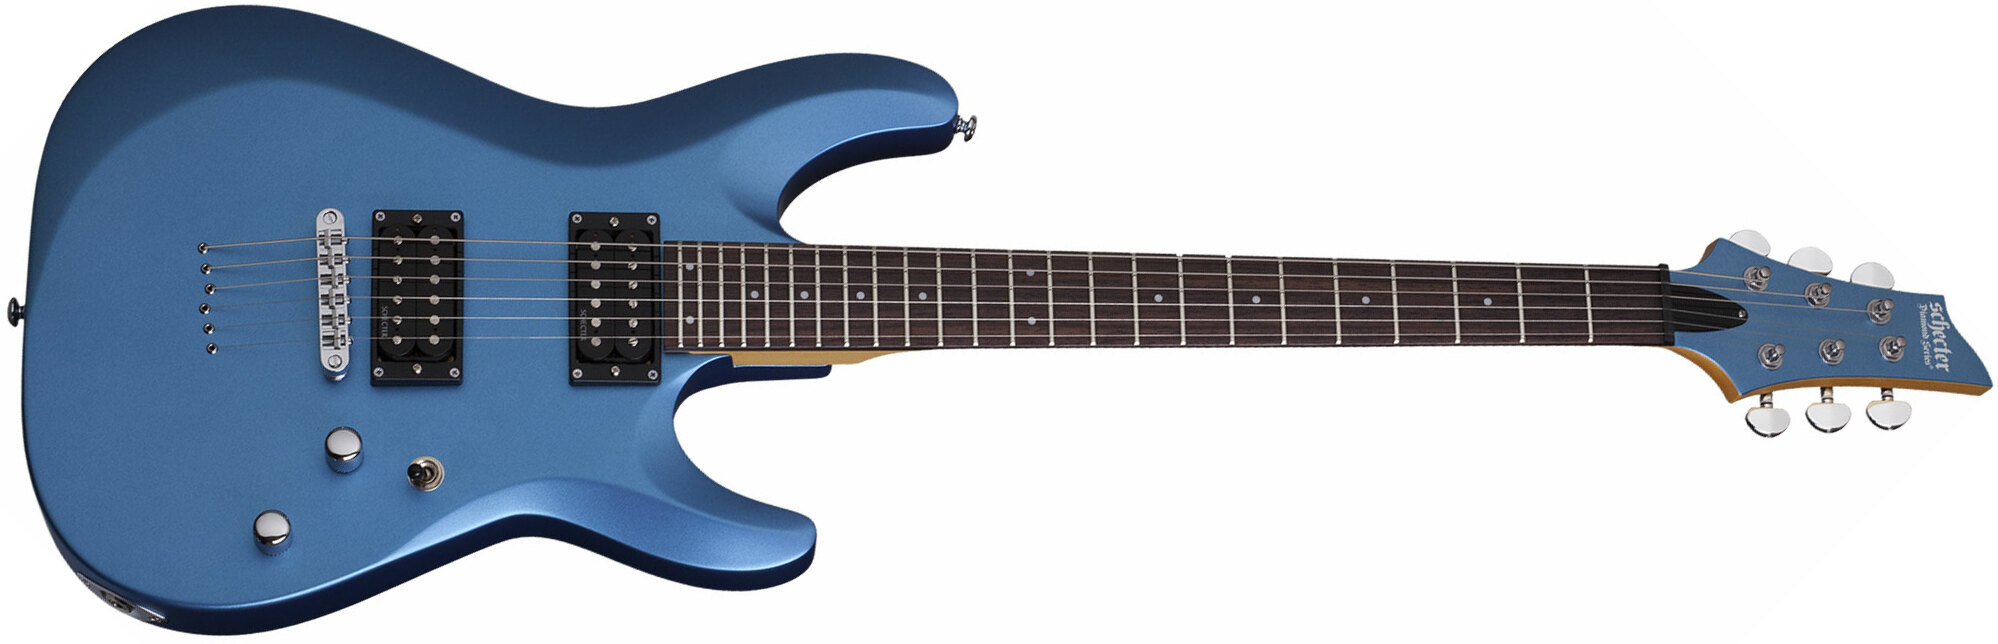 Schecter C-6 Deluxe 2h Ht Rw - Satin Metallic Light Blue - Double cut electric guitar - Main picture